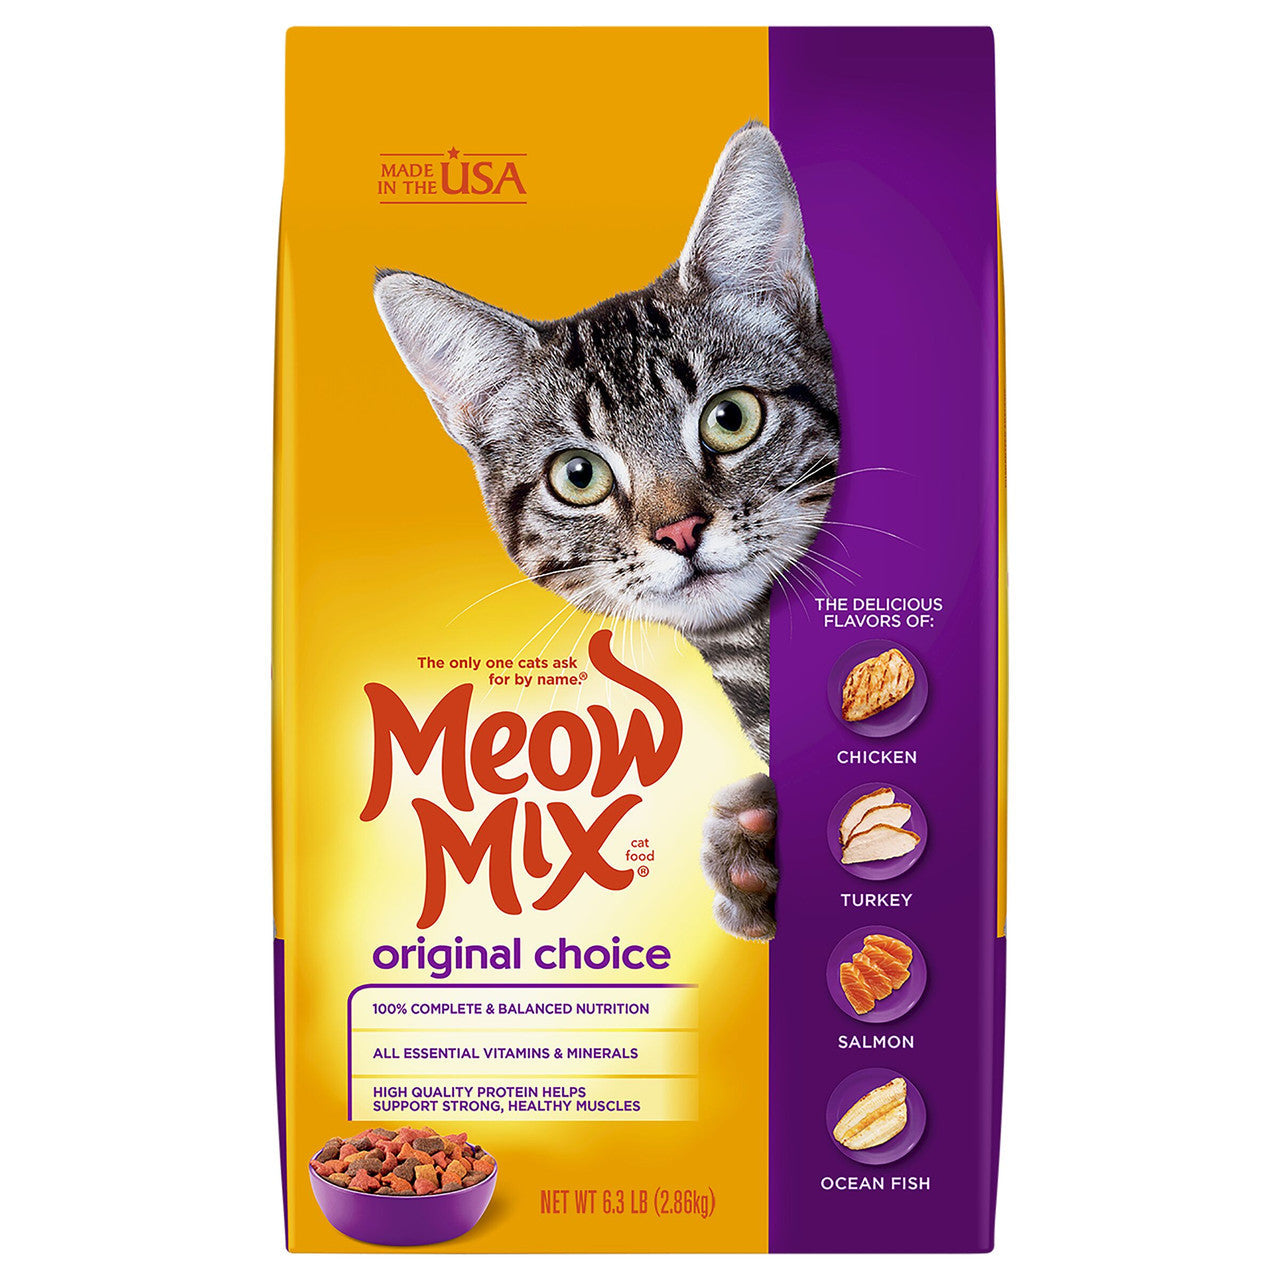 Meow-Mix Original Choice Dry Cat Food Chicken, Turkey, Salmon & Ocean Fish 6.3lb